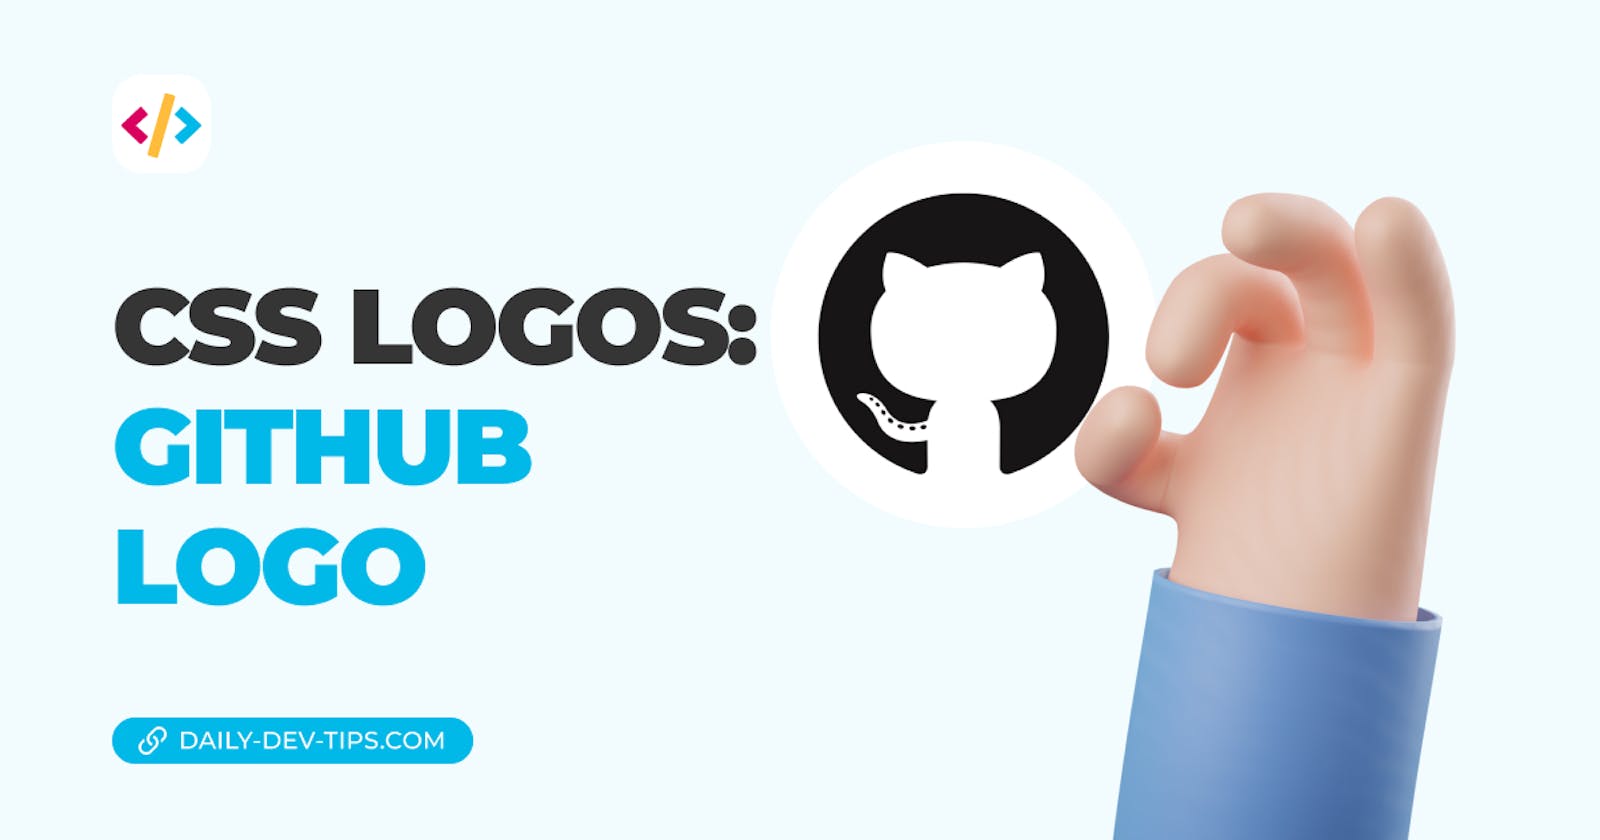 CSS Logos: GitHub logo